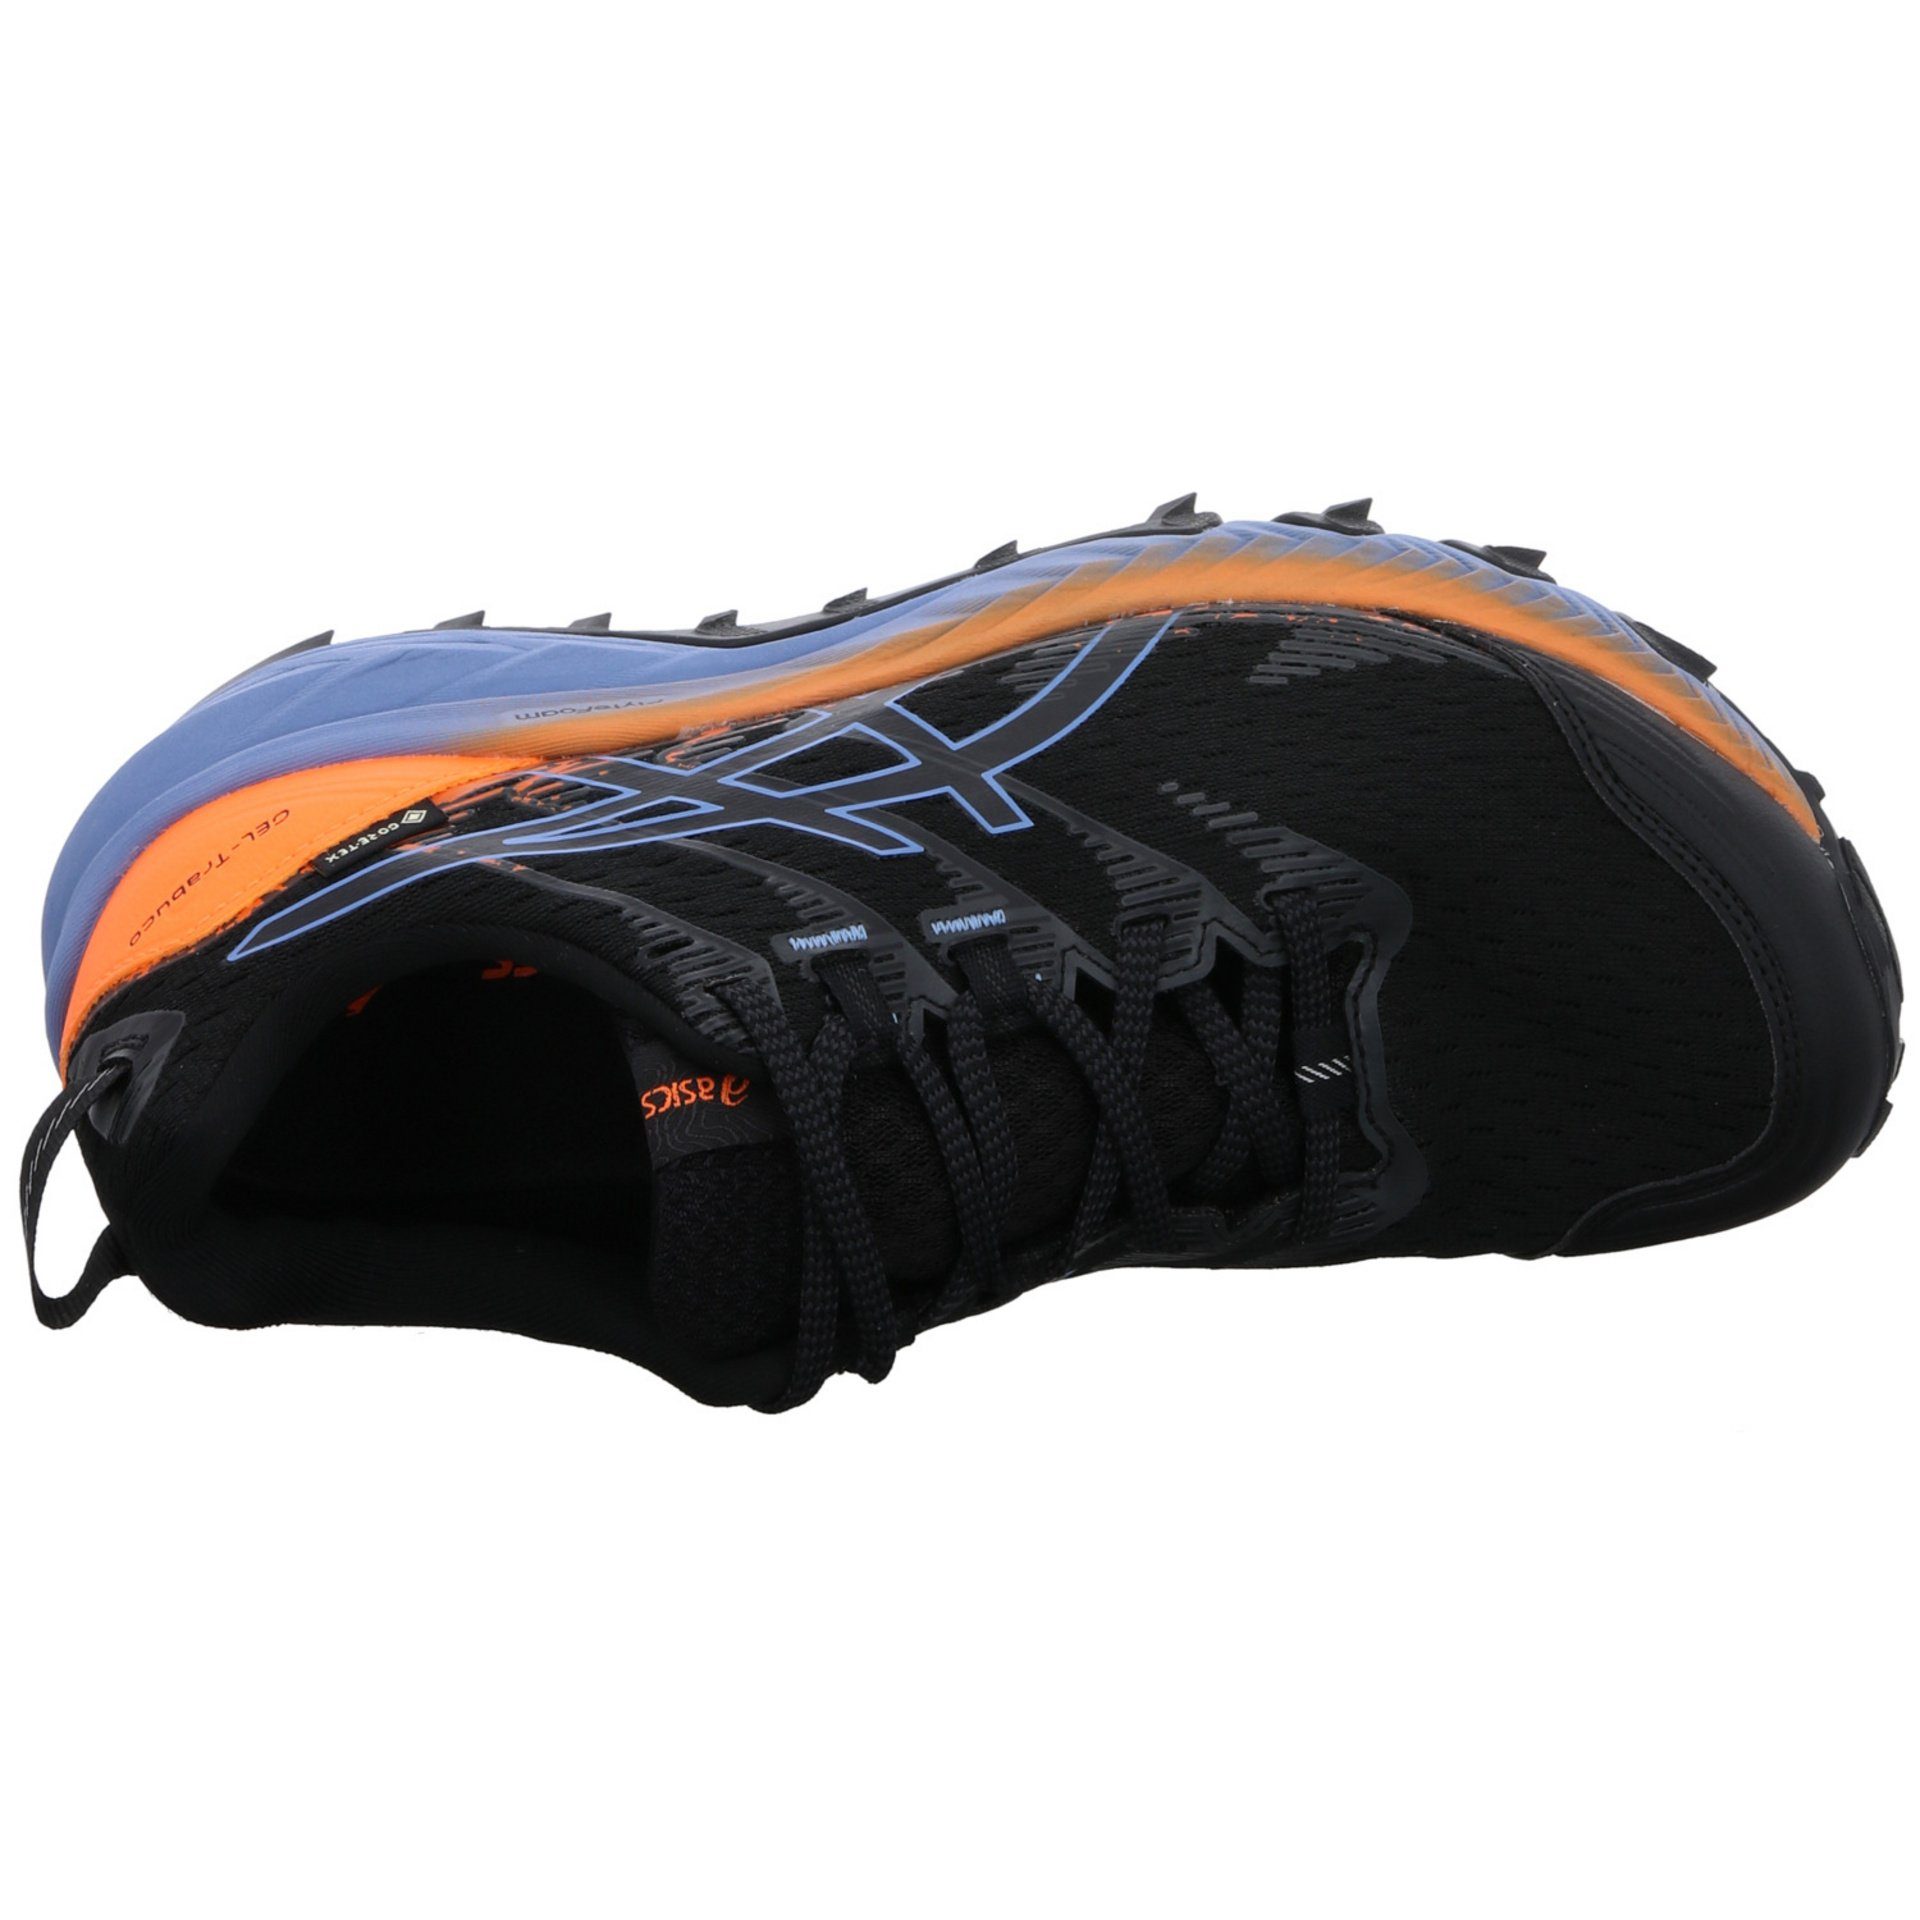 Synthetikkombination Trailrunner kombi-blau/g Gel schwarz Trabuco GTX Asics Sneaker 10